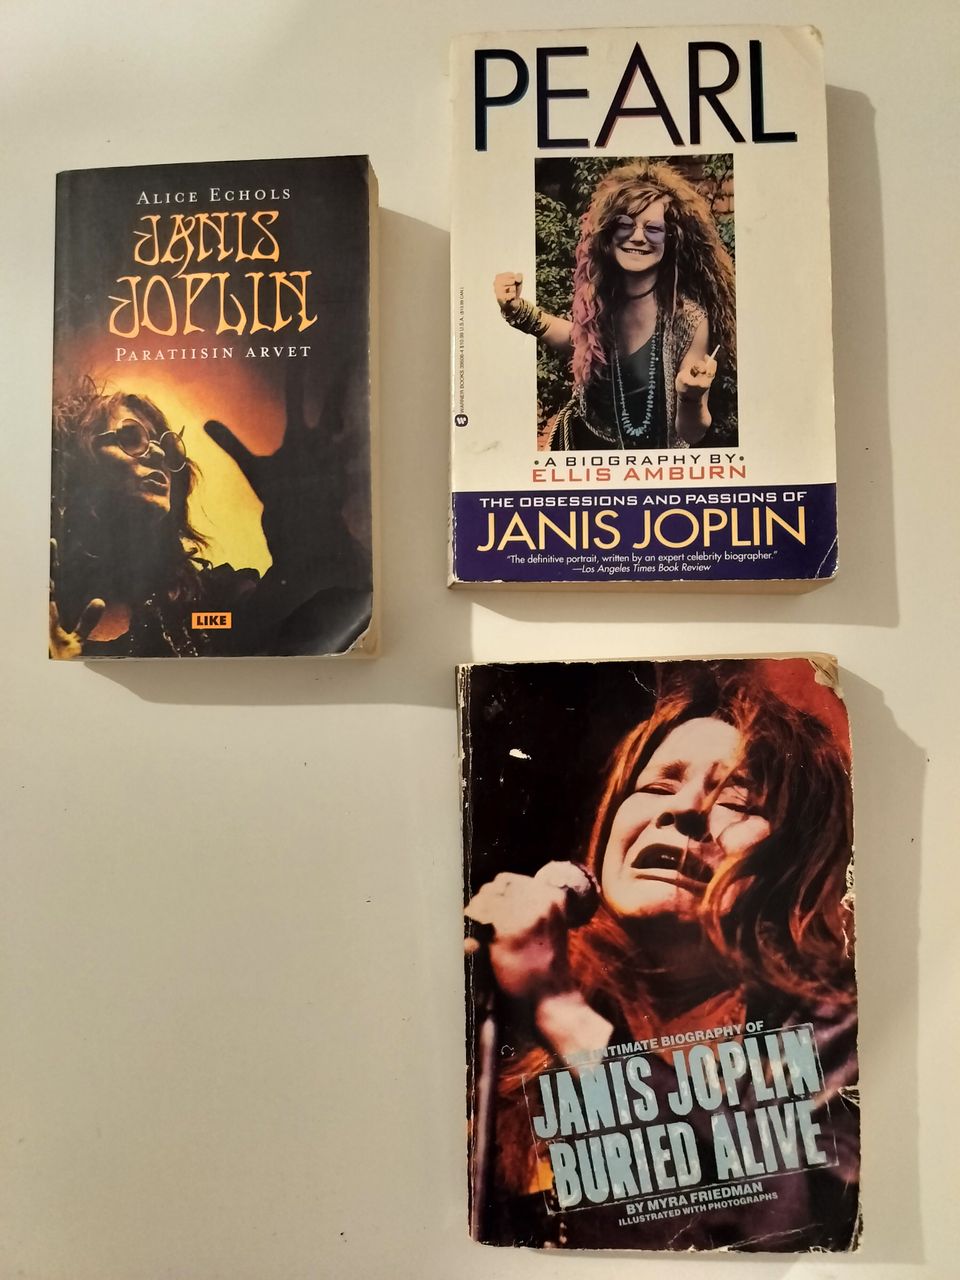 Janis Joplin kirjoja